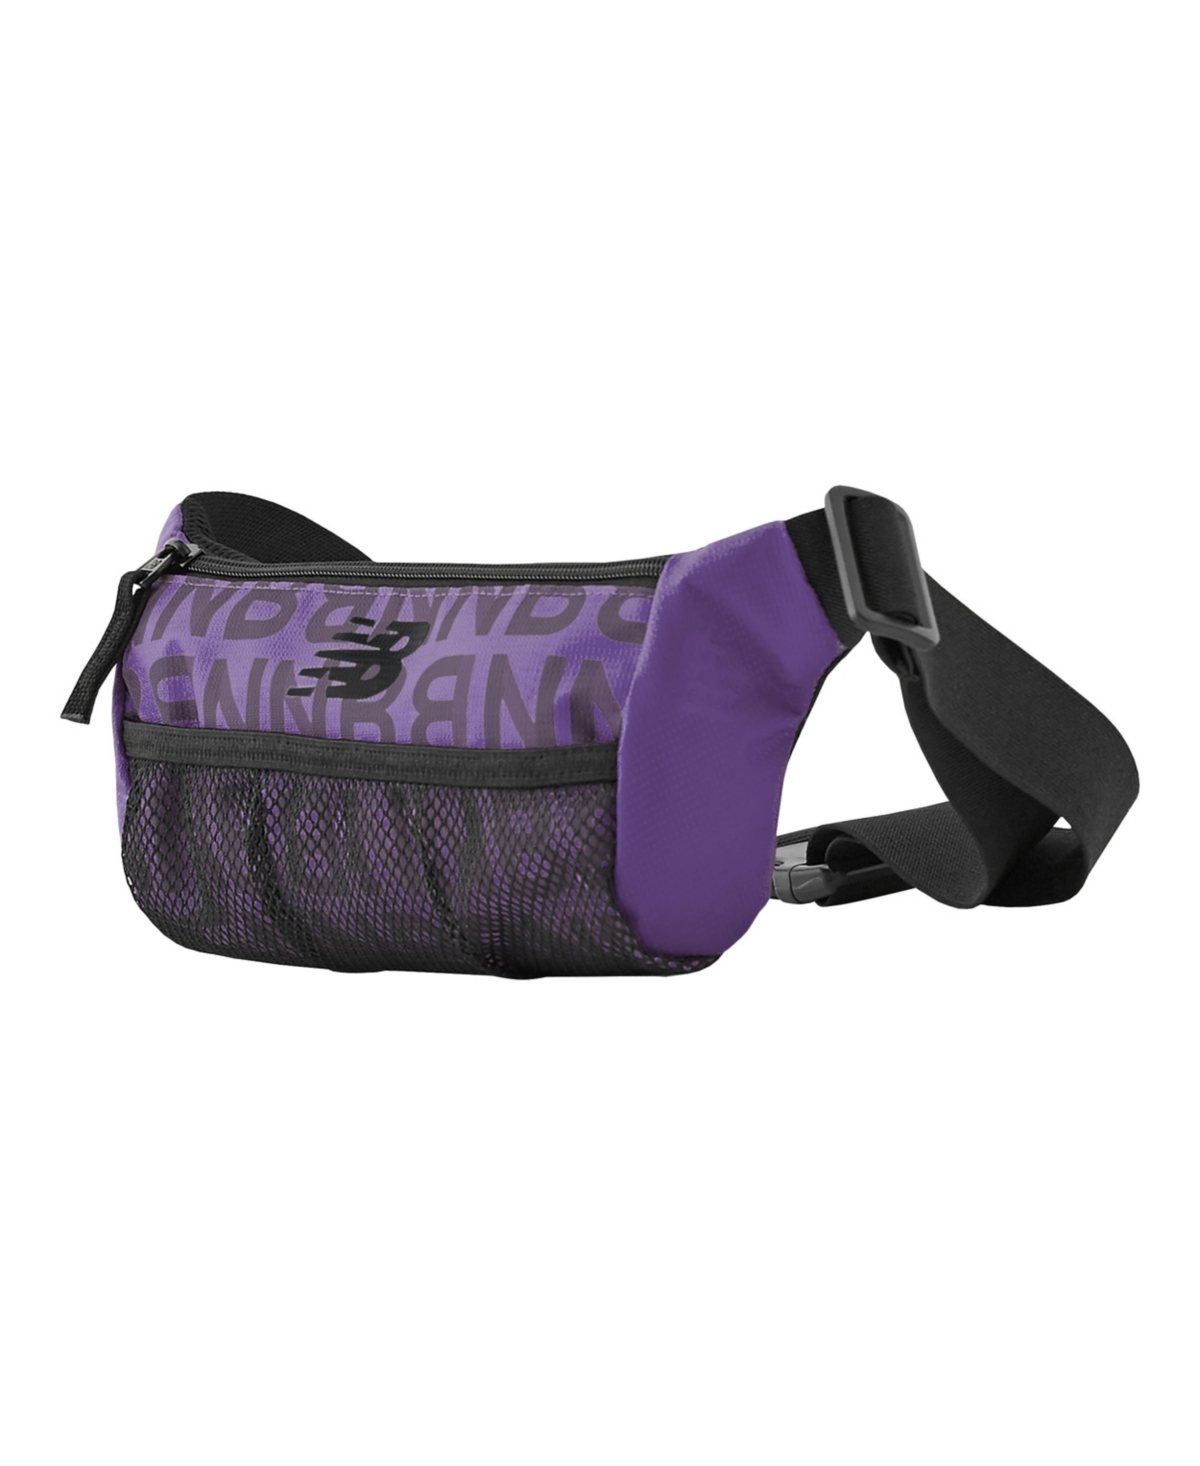 New Balance Opp Core Waist Bag, Small In Purple